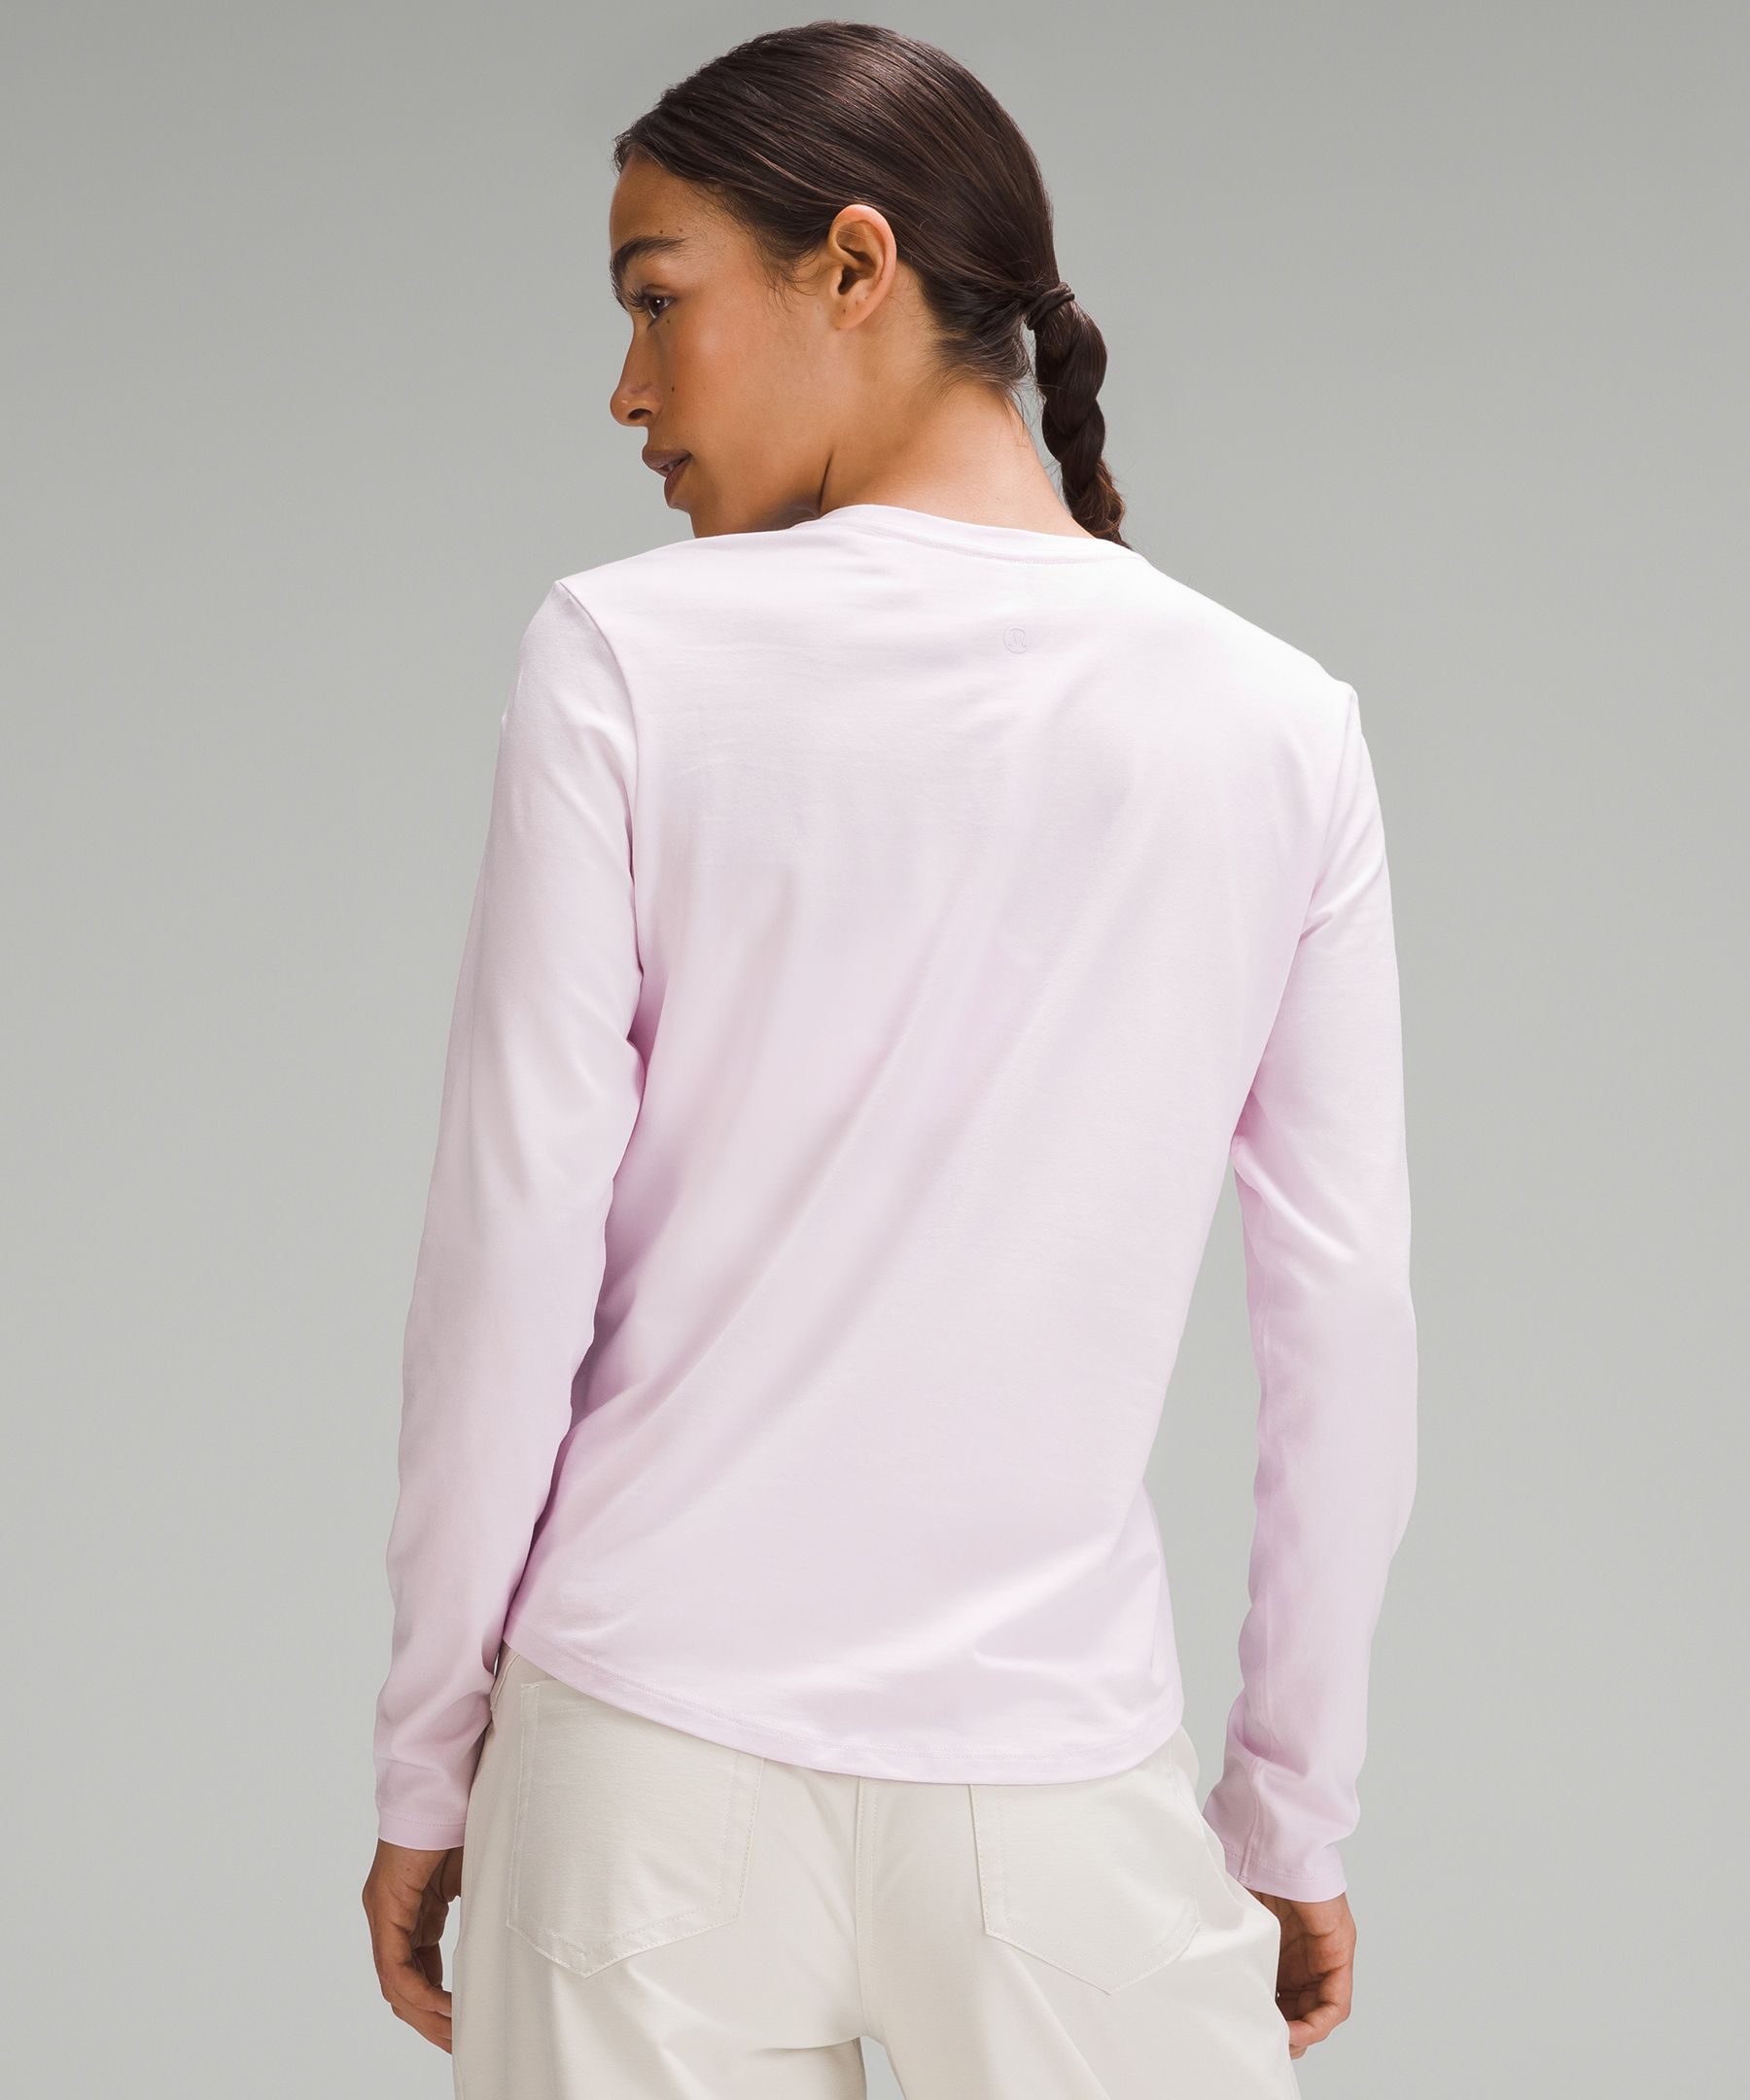 Lululemon Love Long-Sleeve Shirt - Pink - Size 4 Pima Cotton Fabric